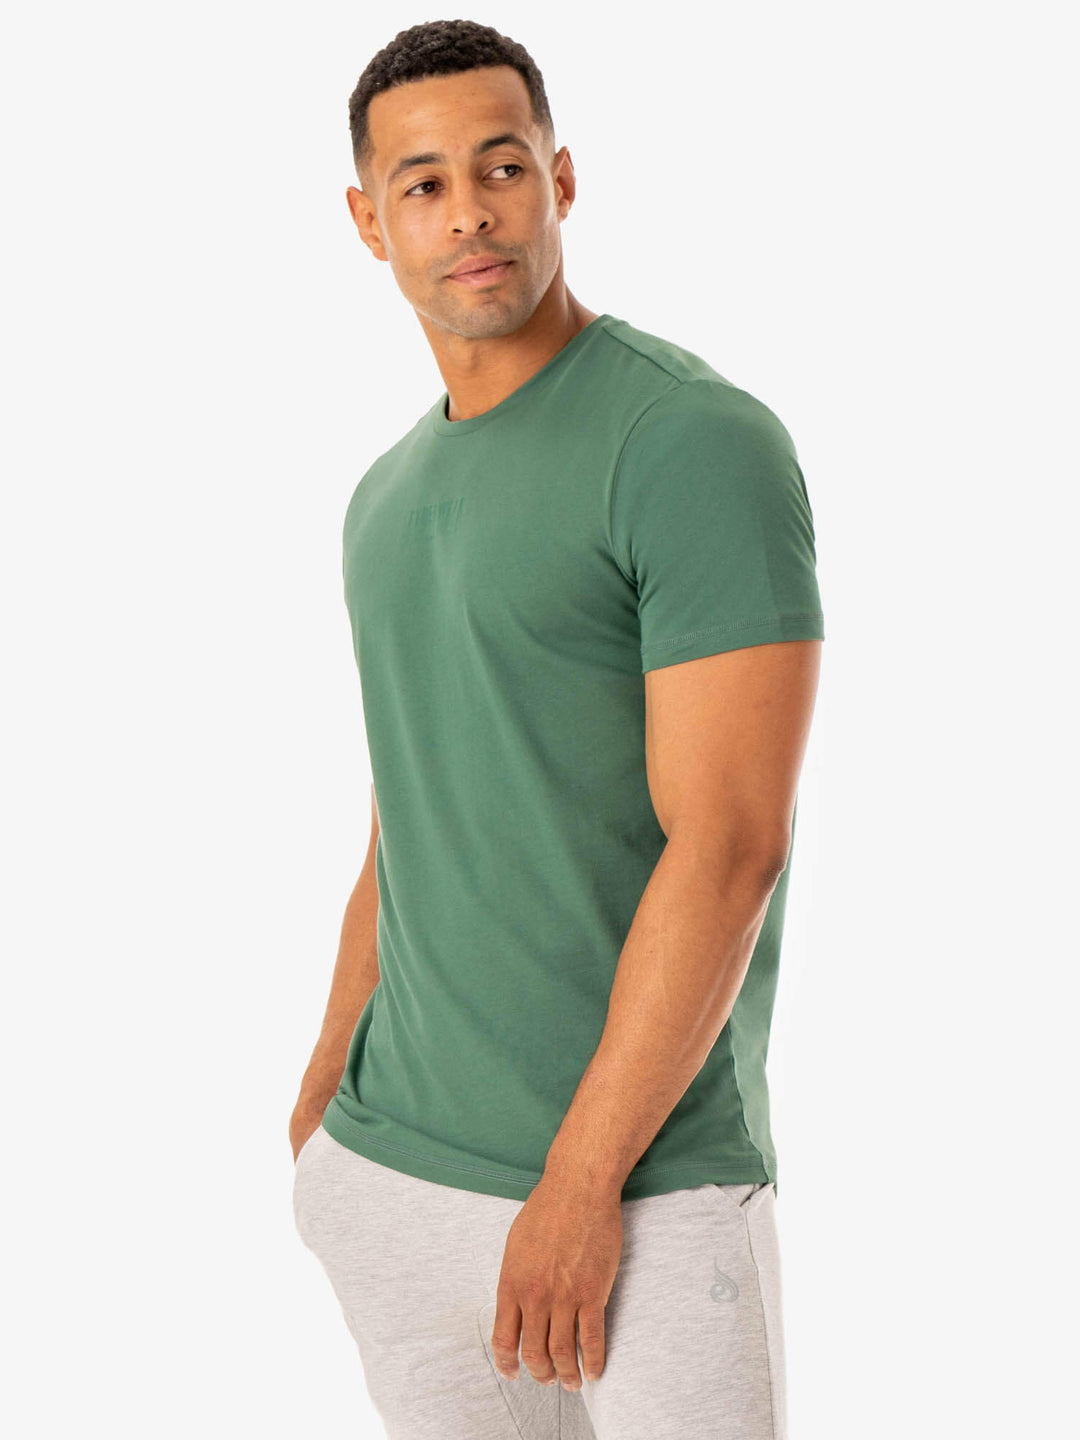 Limitless T-Shirt - Forest Green Clothing Ryderwear 